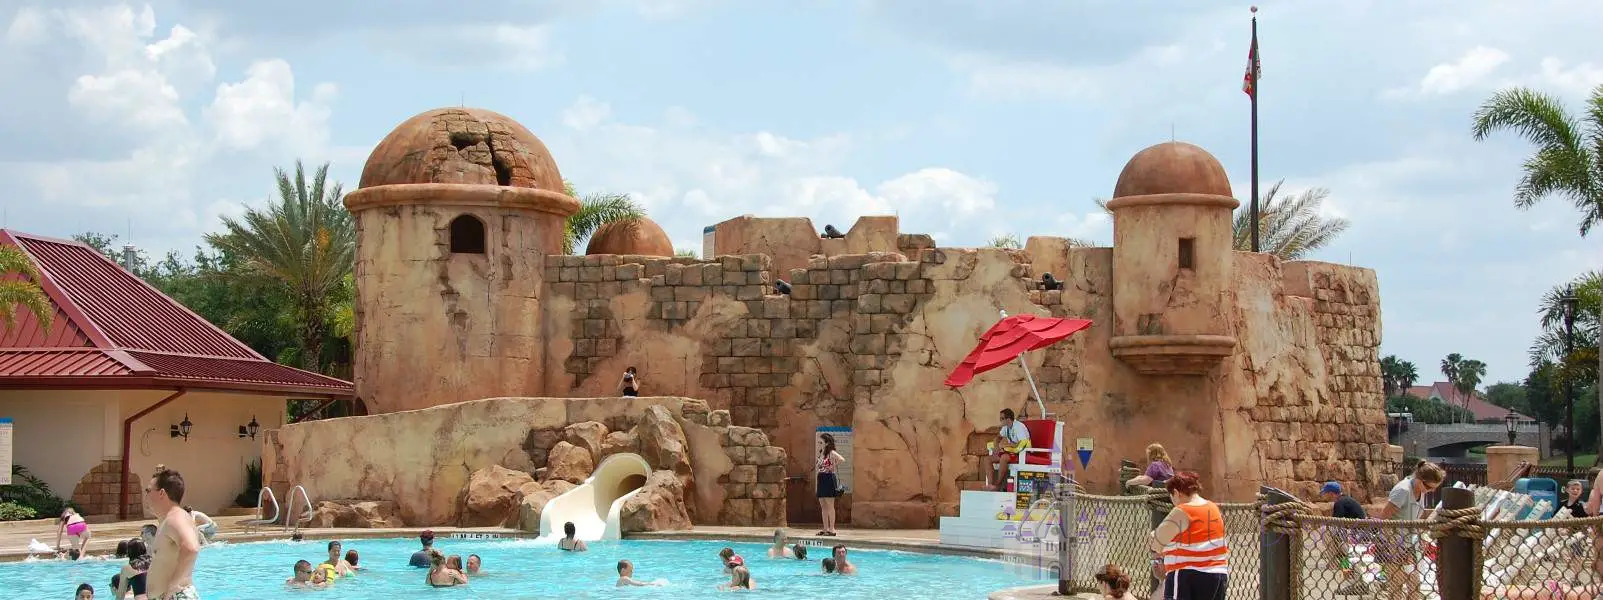 Caribbean Beach Resort takes the Caribbean to Disney!